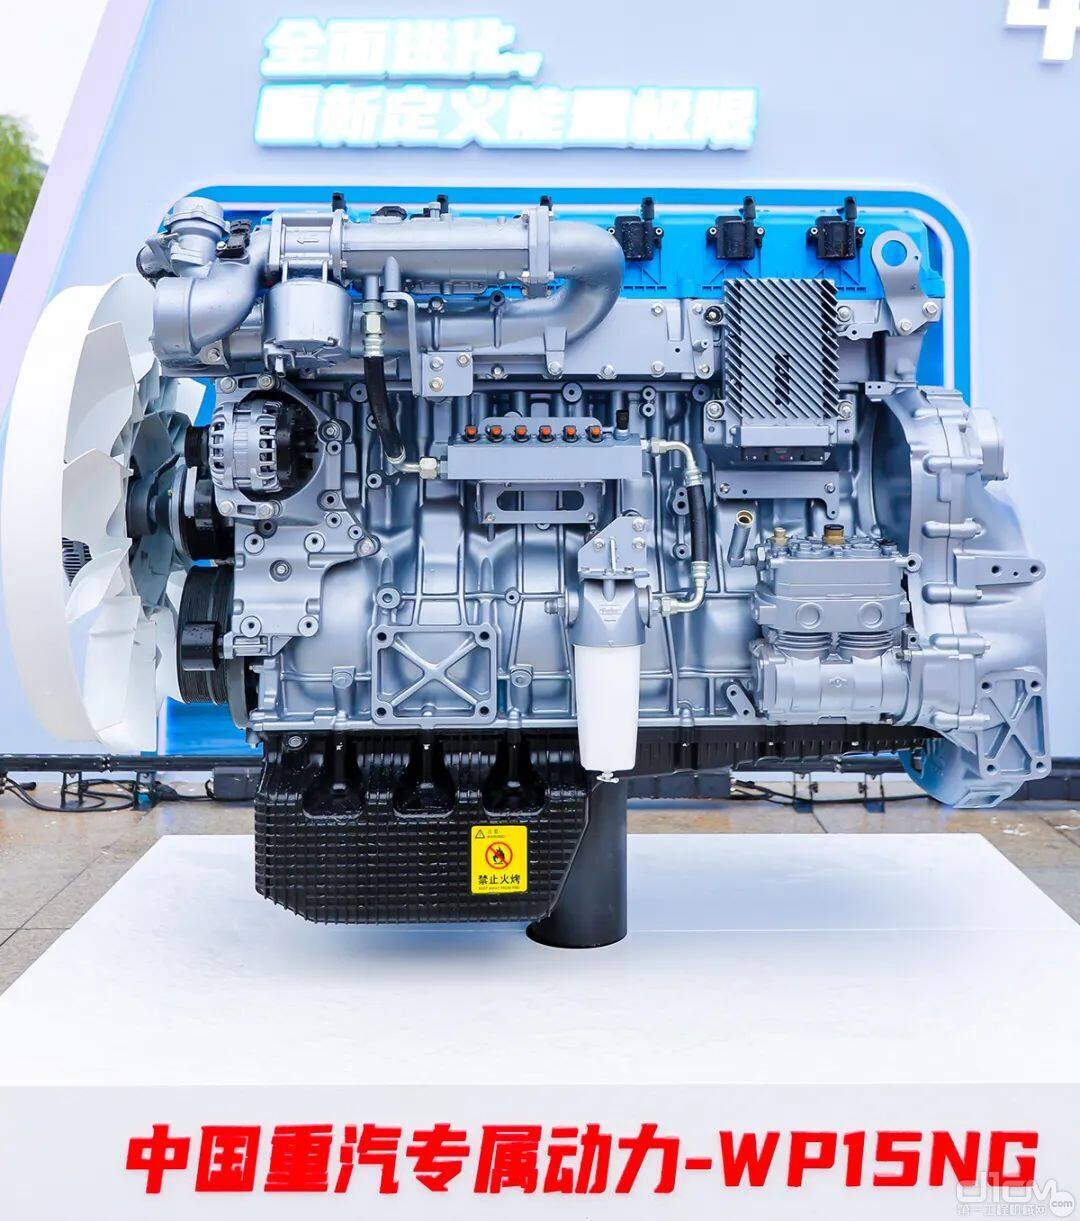 wp15ng发动机wp15ng发动机是大马力燃气牵引车专属动力,最大扭矩高达